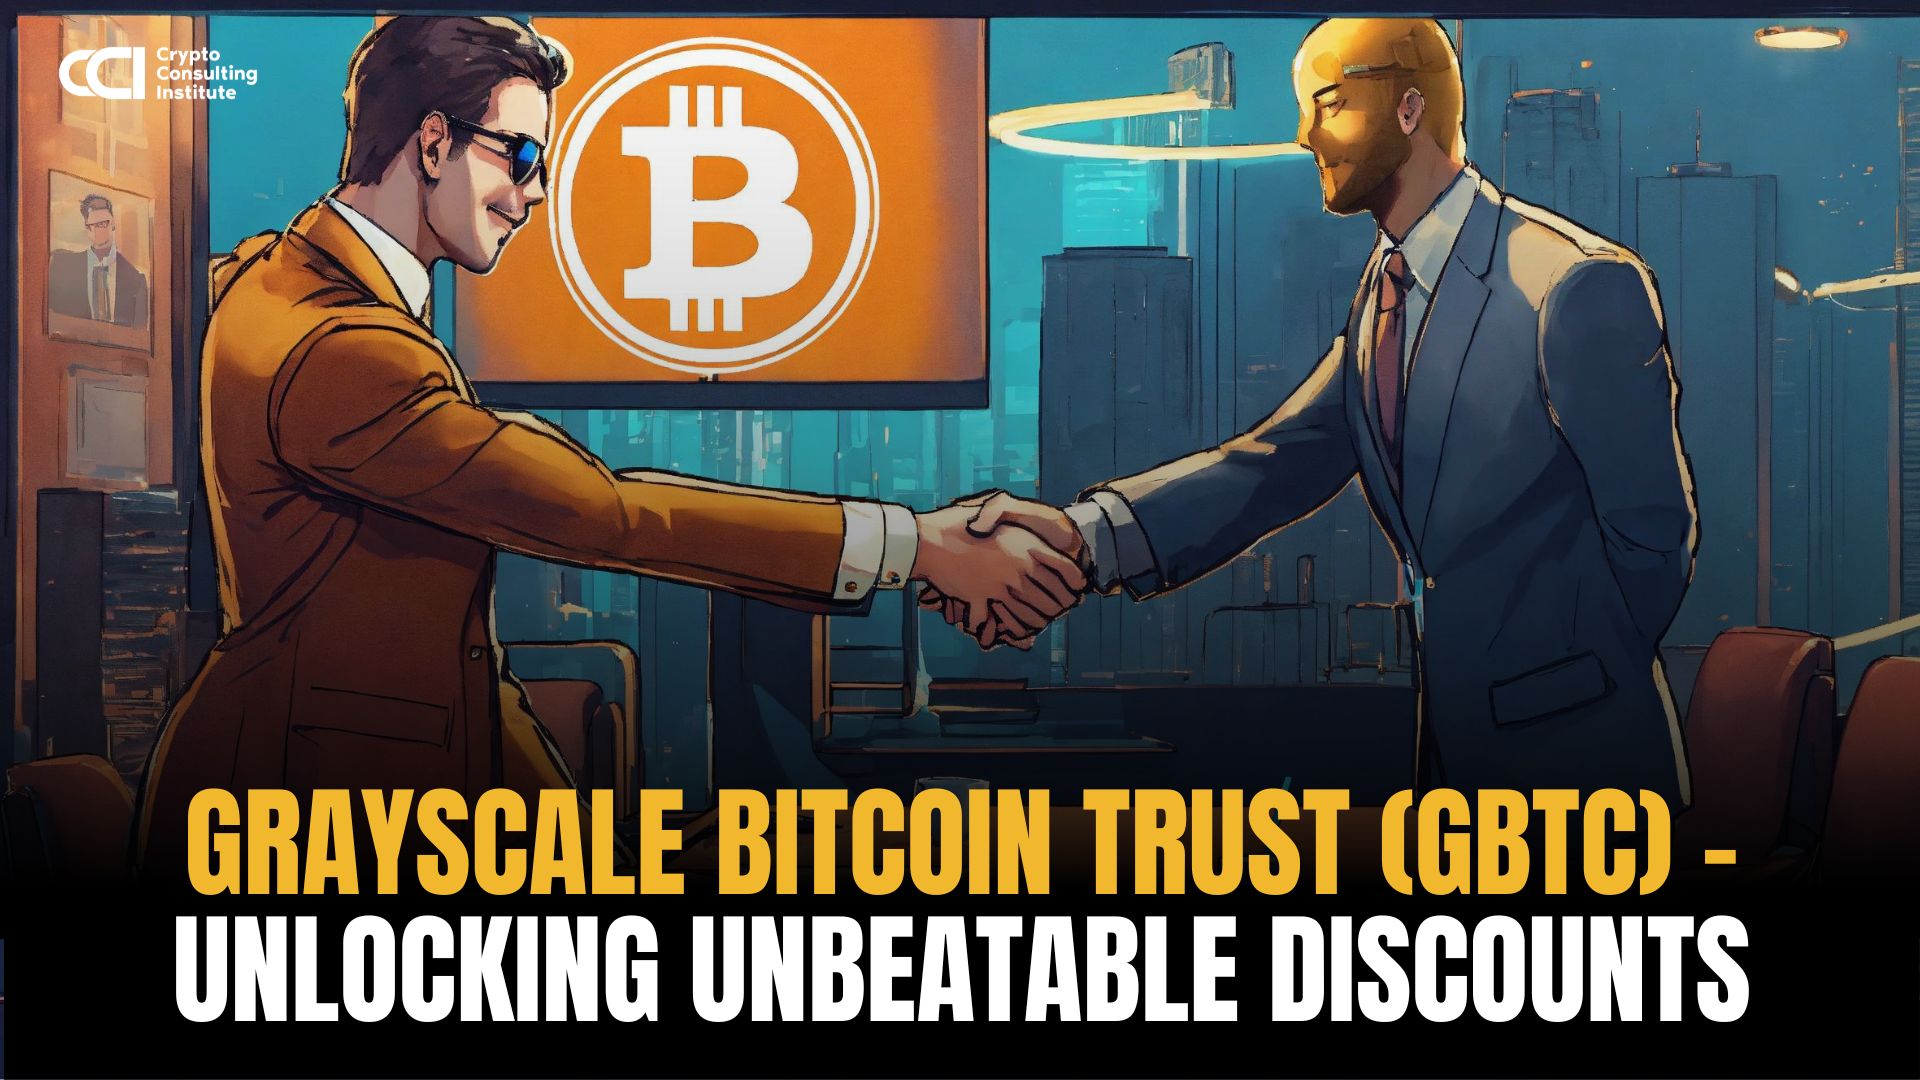 Introducing the Grayscale Bitcoin Trust (GBTC) - Unlocking Unbeatable Discounts!